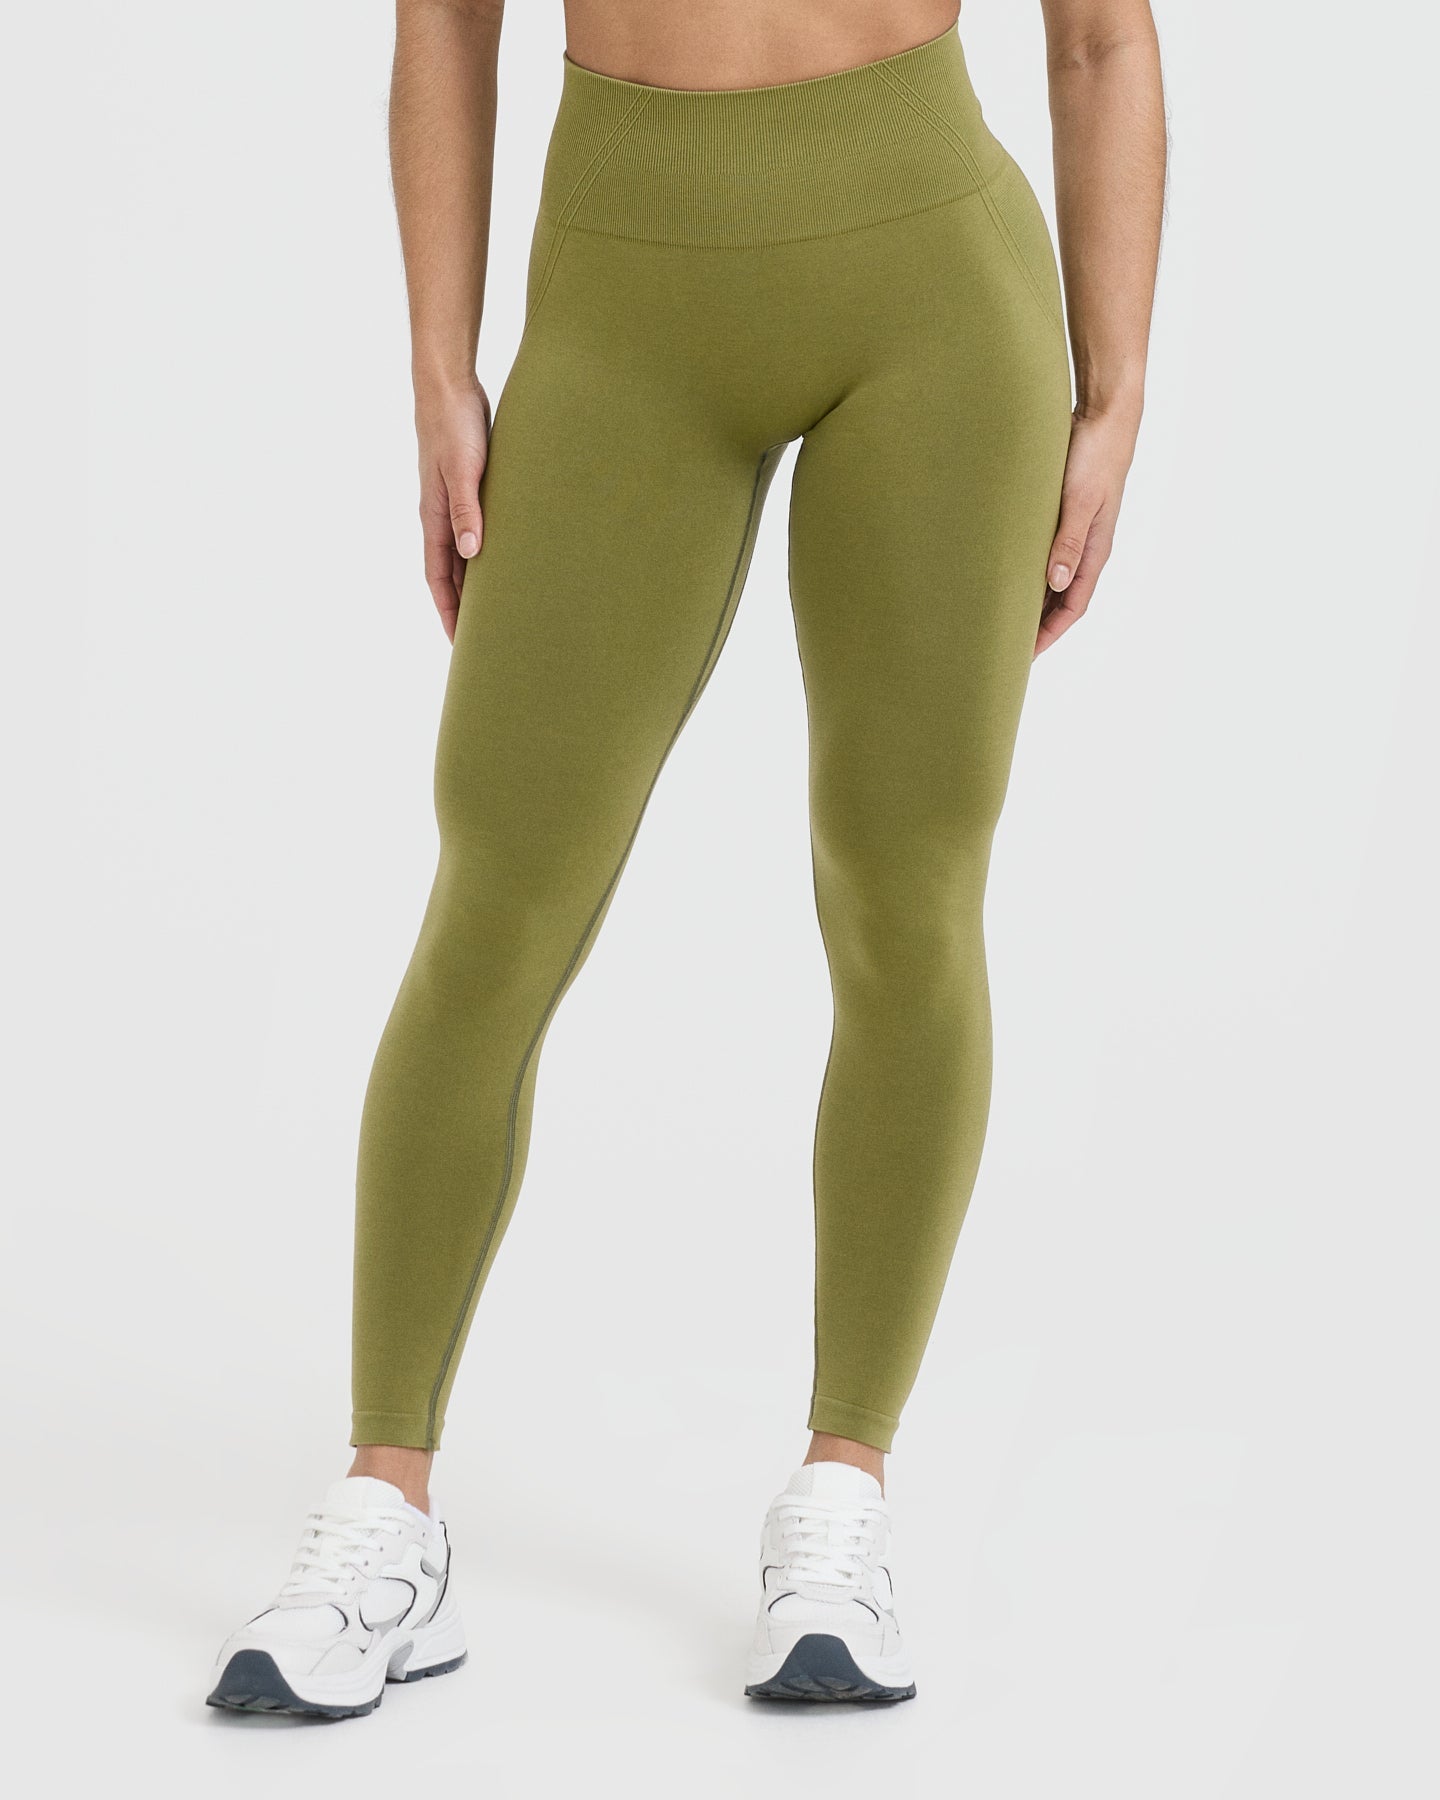 Let's Gym USA Brazilian Fashion Fitness Leggings Push Up Olive Green